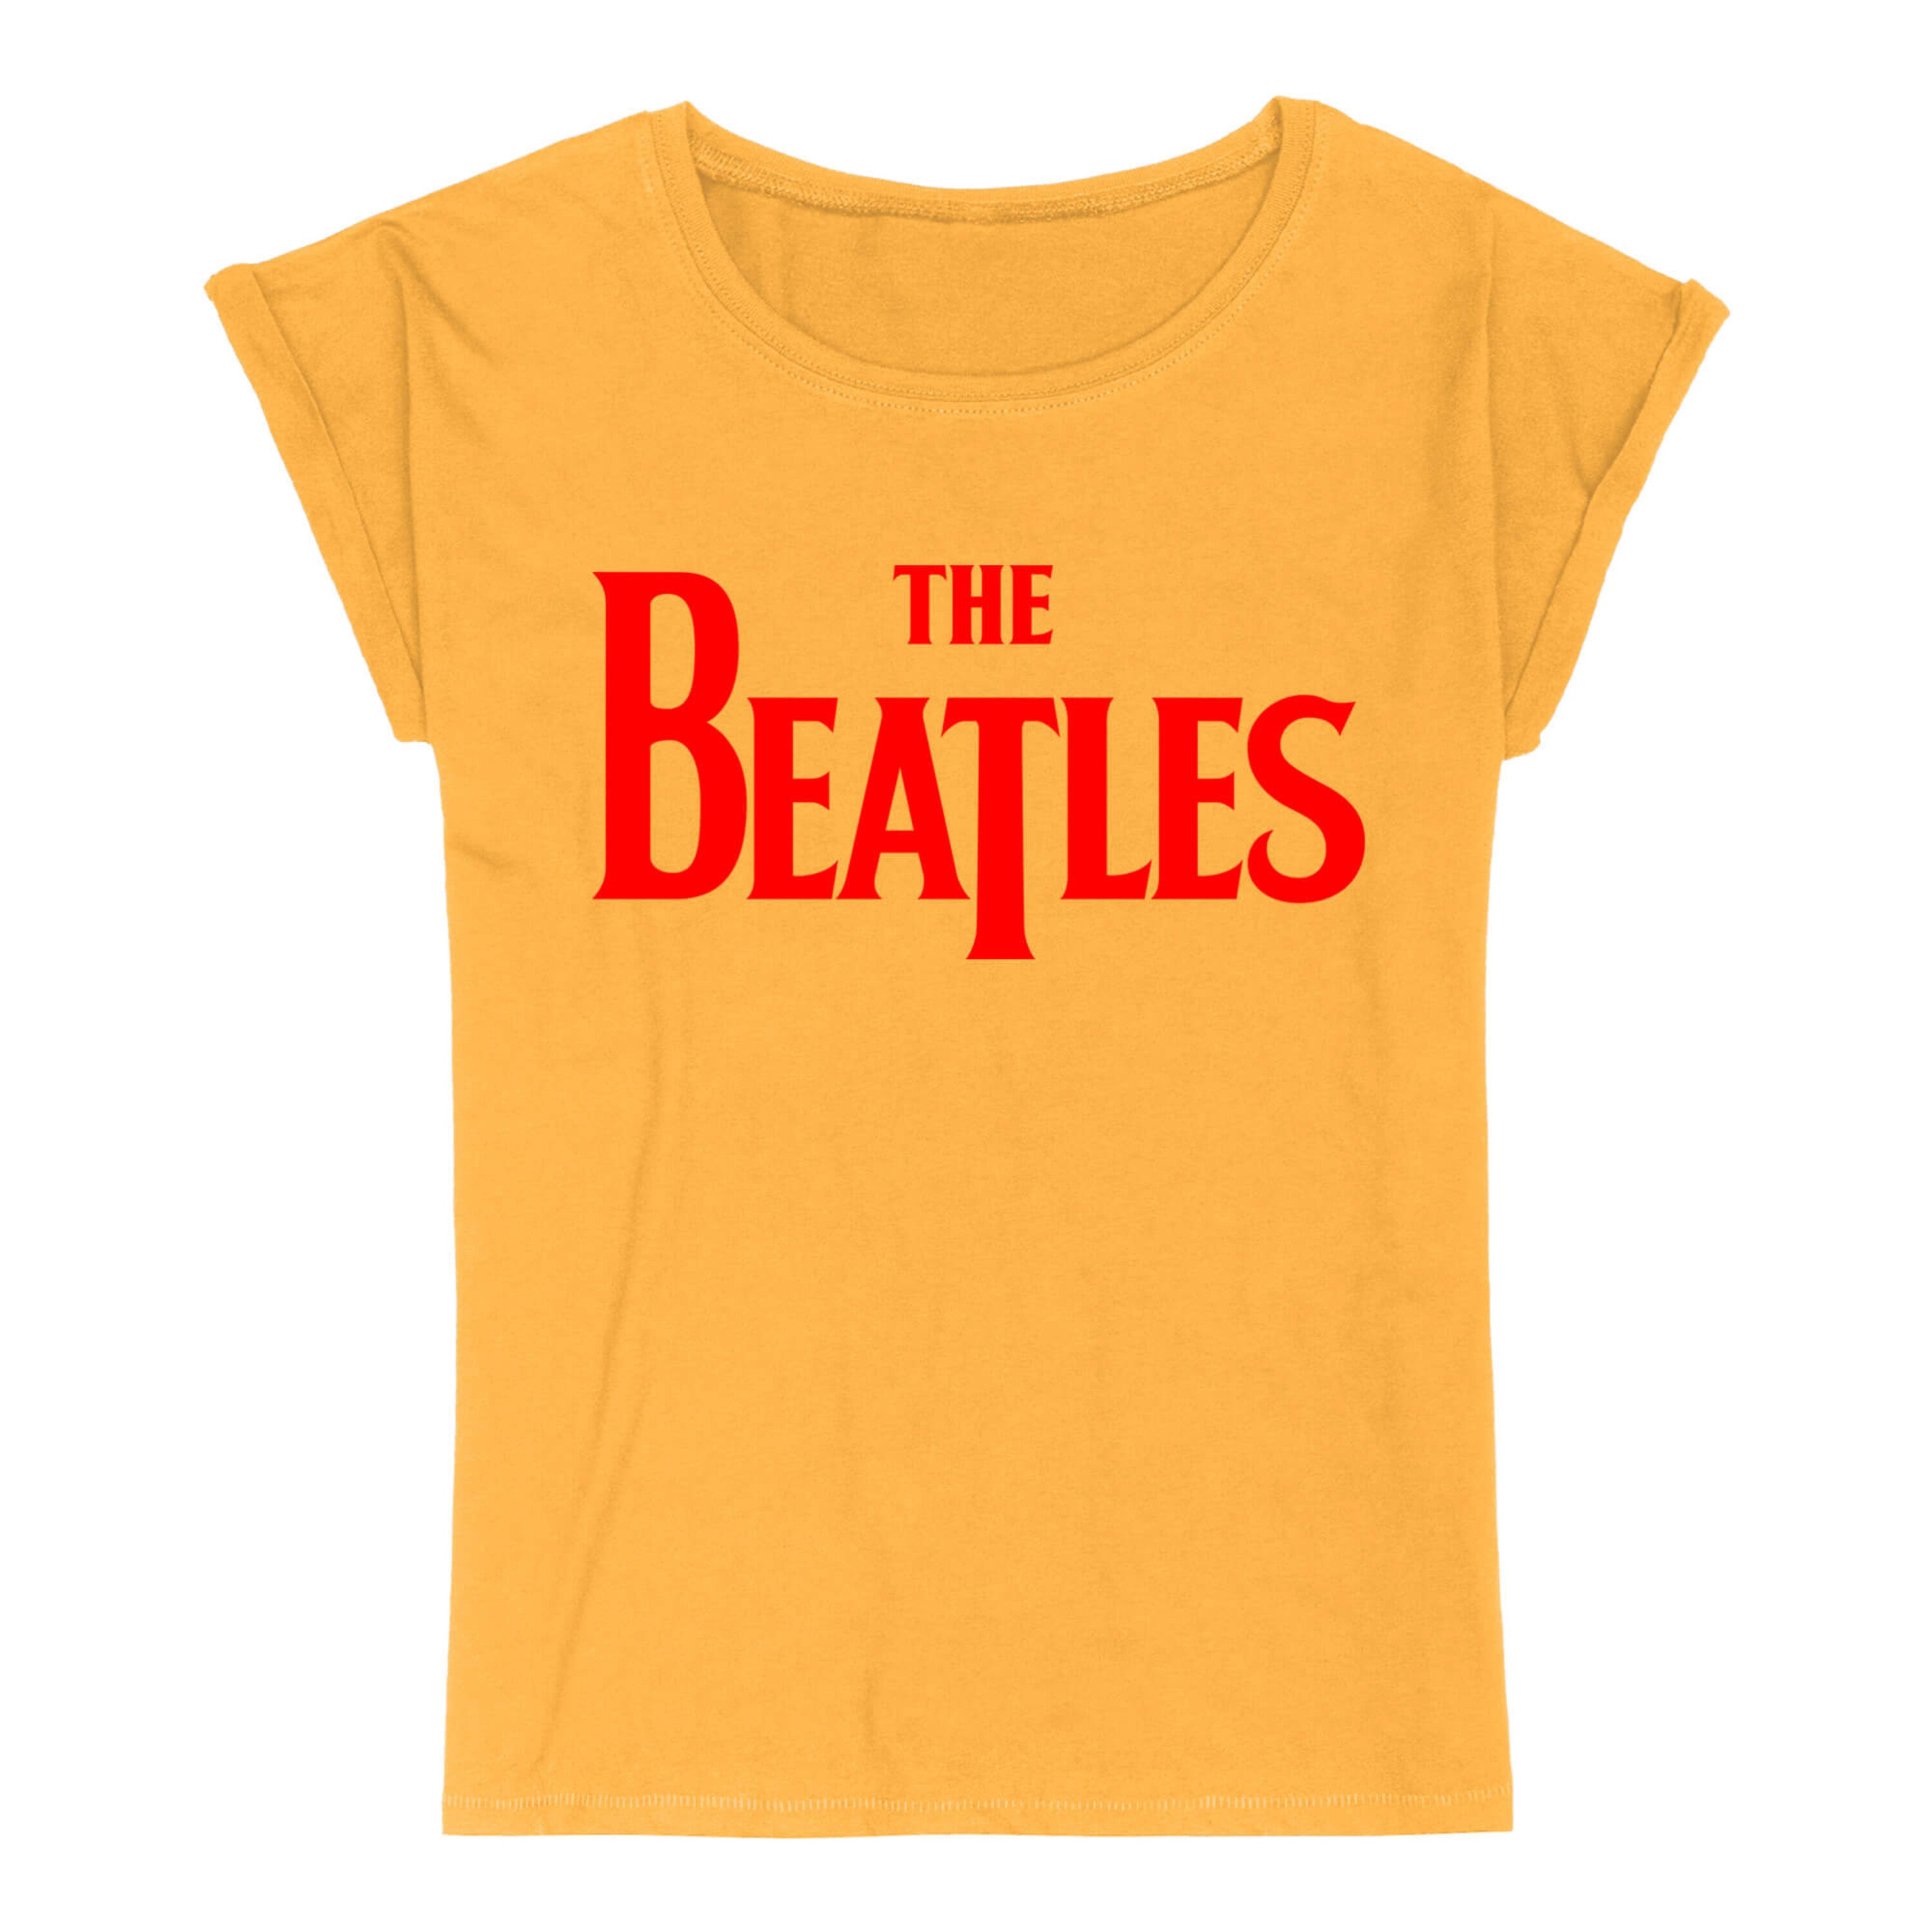 https://images.bravado.de/prod/product-assets/product-asset-data/beatles-the/the-beatles-domestic/products/136933/web/247352/image-thumb__247352__3000x3000_original/The-Beatles-Logo-Girlie-Shirt-orange-136933-247352.jpg